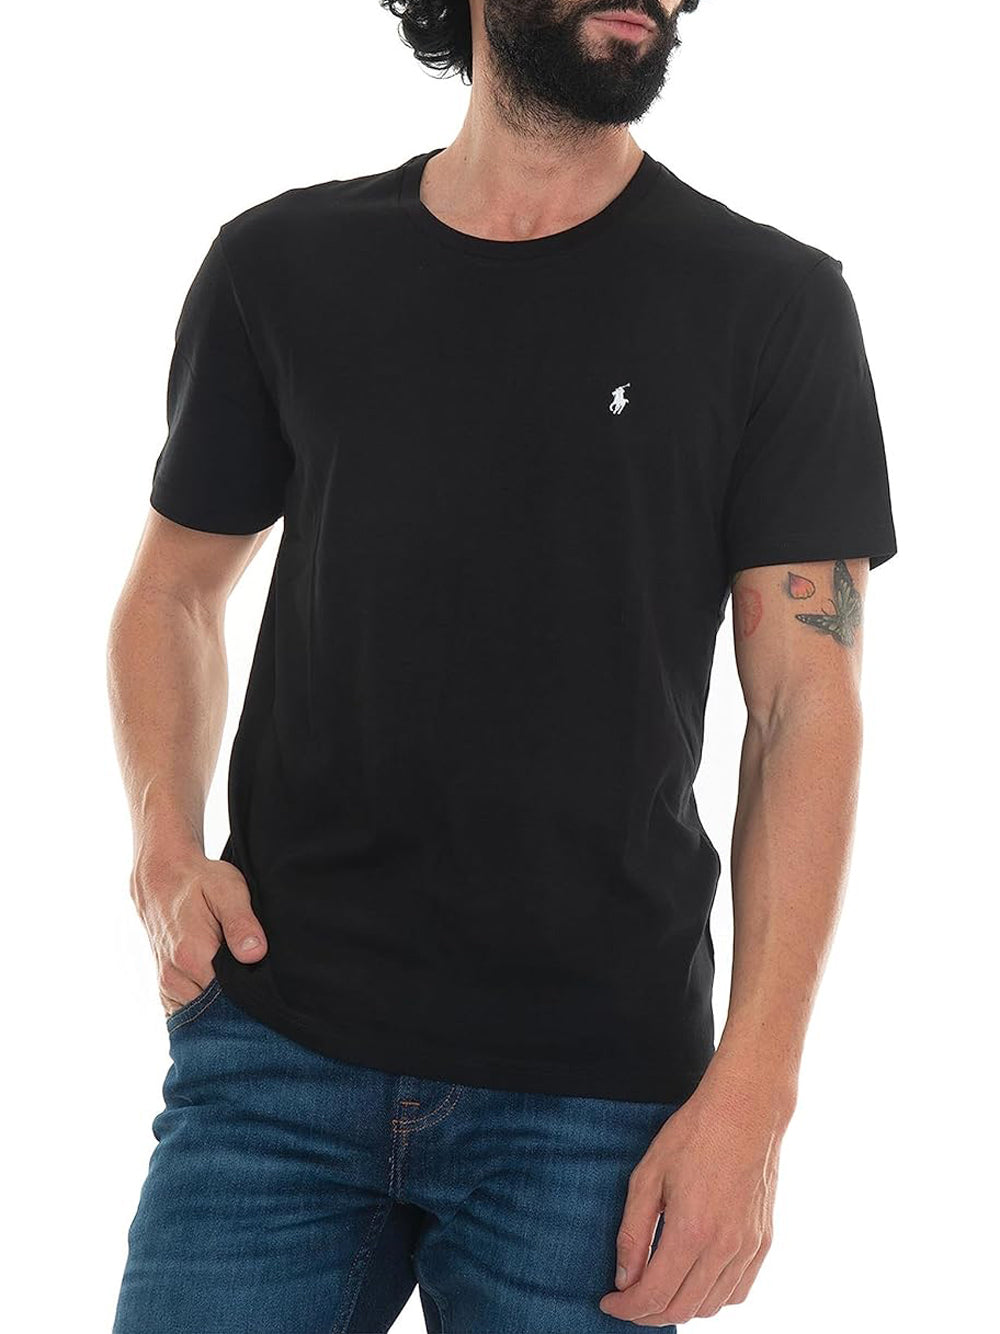 RALPH LAUREN T-shirt Uomo - Nero modello S/S CREW-TOP